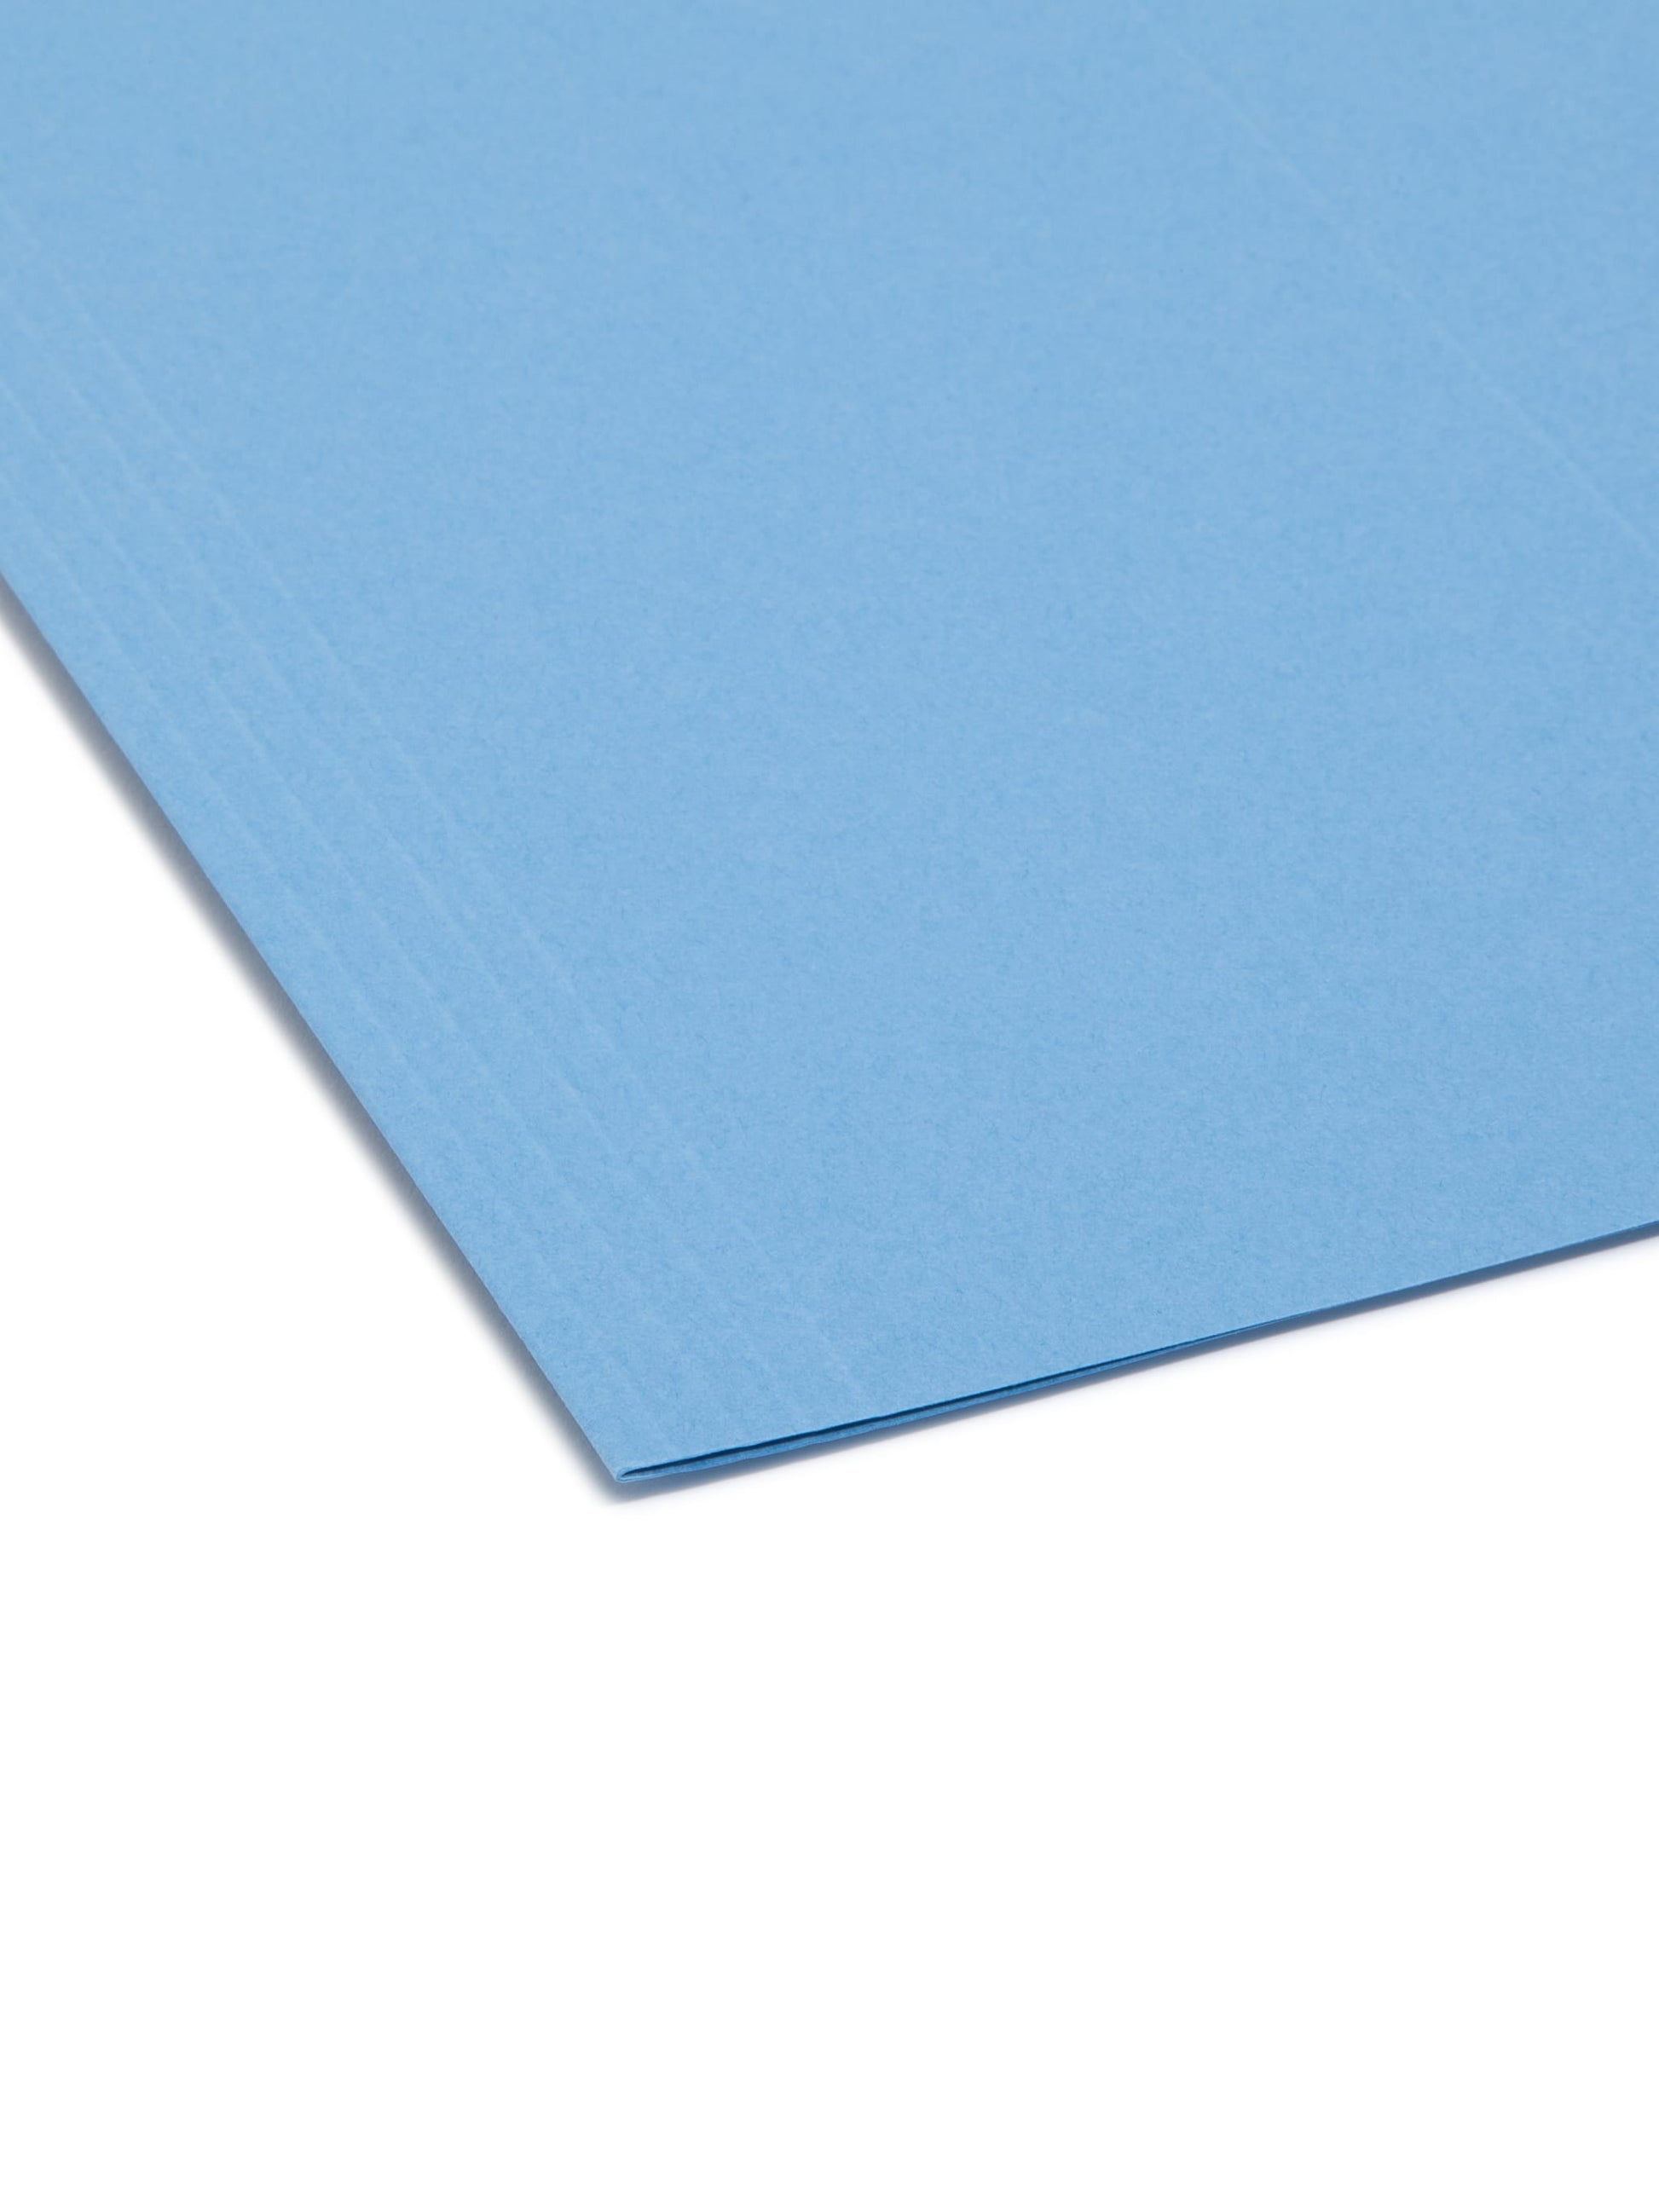 Standard Hanging File Folders with 1/5-Cut Tabs, Blue Color, Letter Size, Set of 25, 086486640602